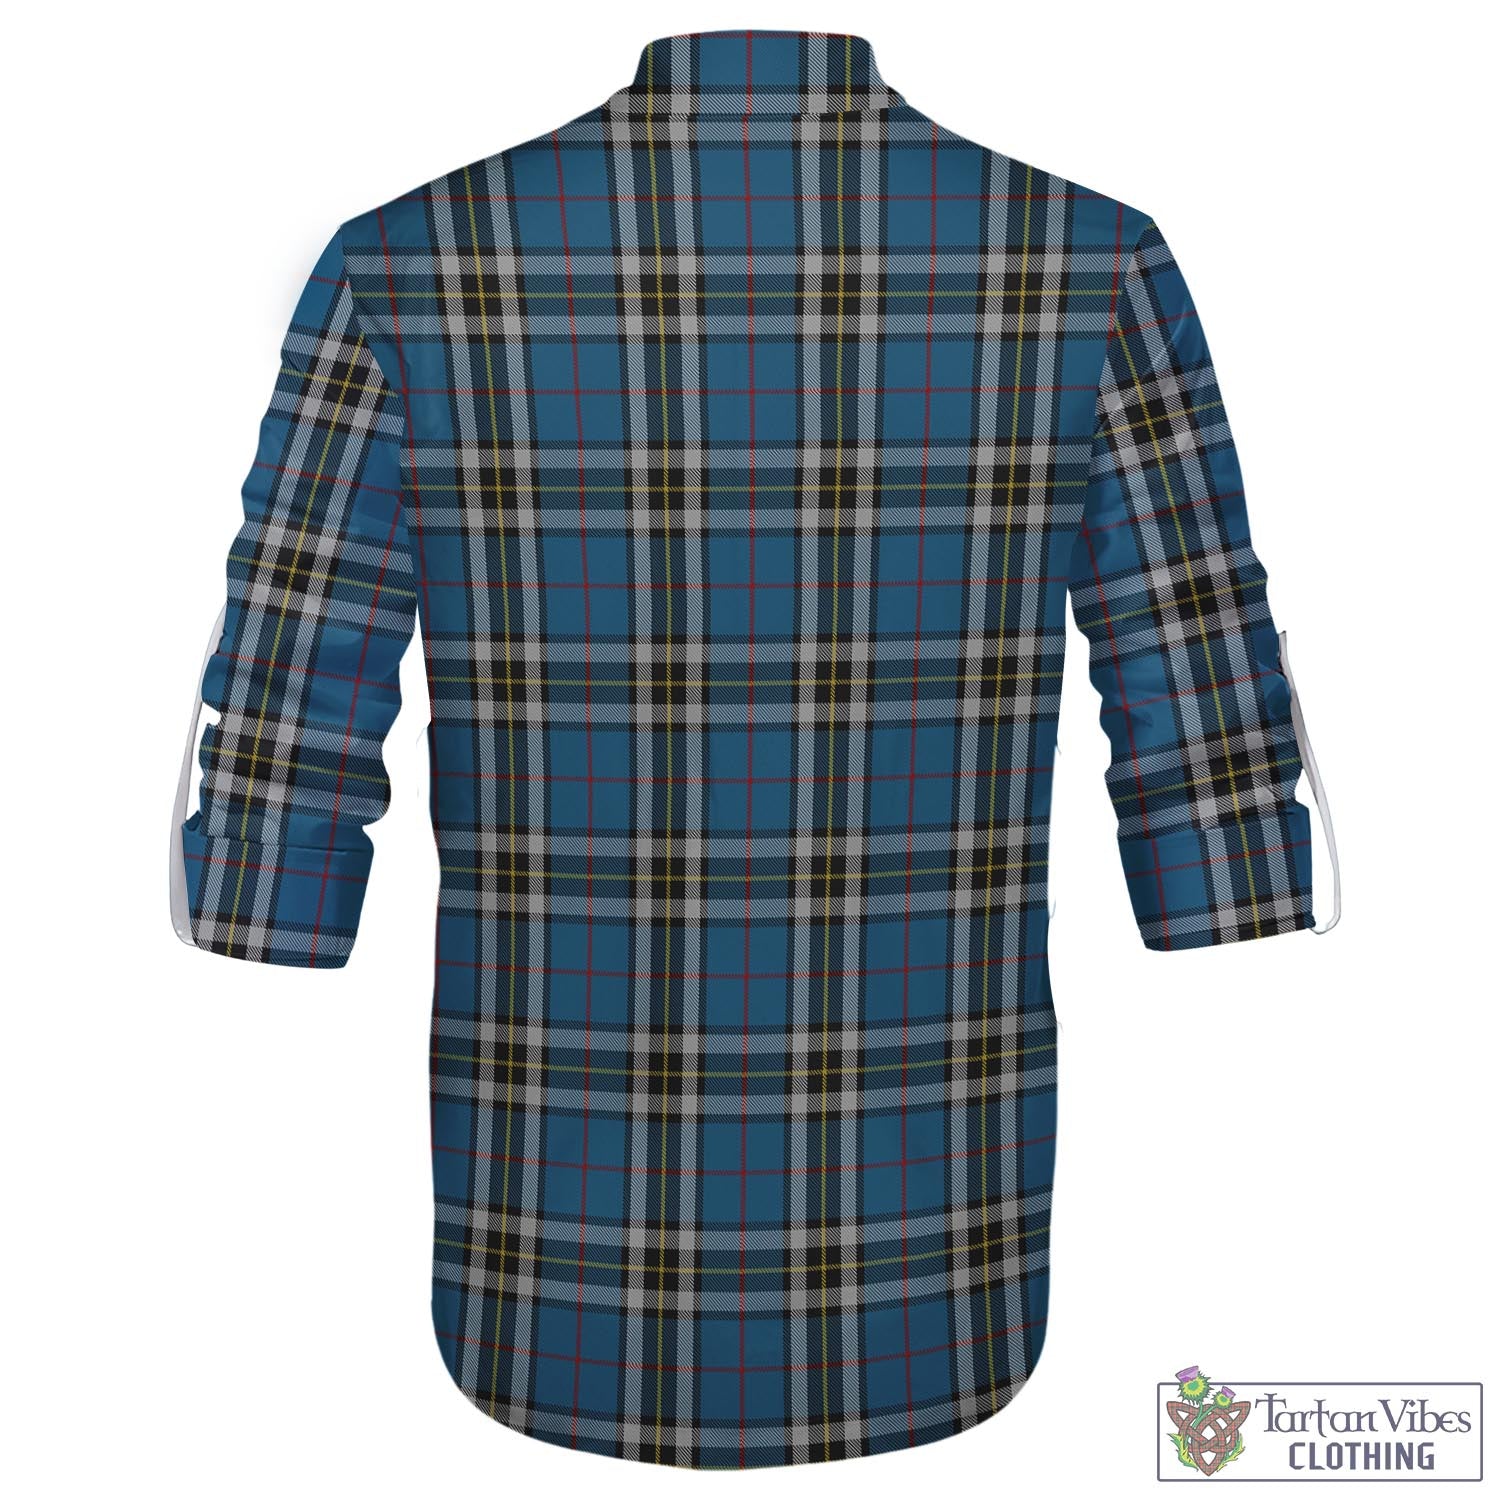 Tartan Vibes Clothing Thomson Dress Blue Tartan Men's Scottish Traditional Jacobite Ghillie Kilt Shirt with Family Crest